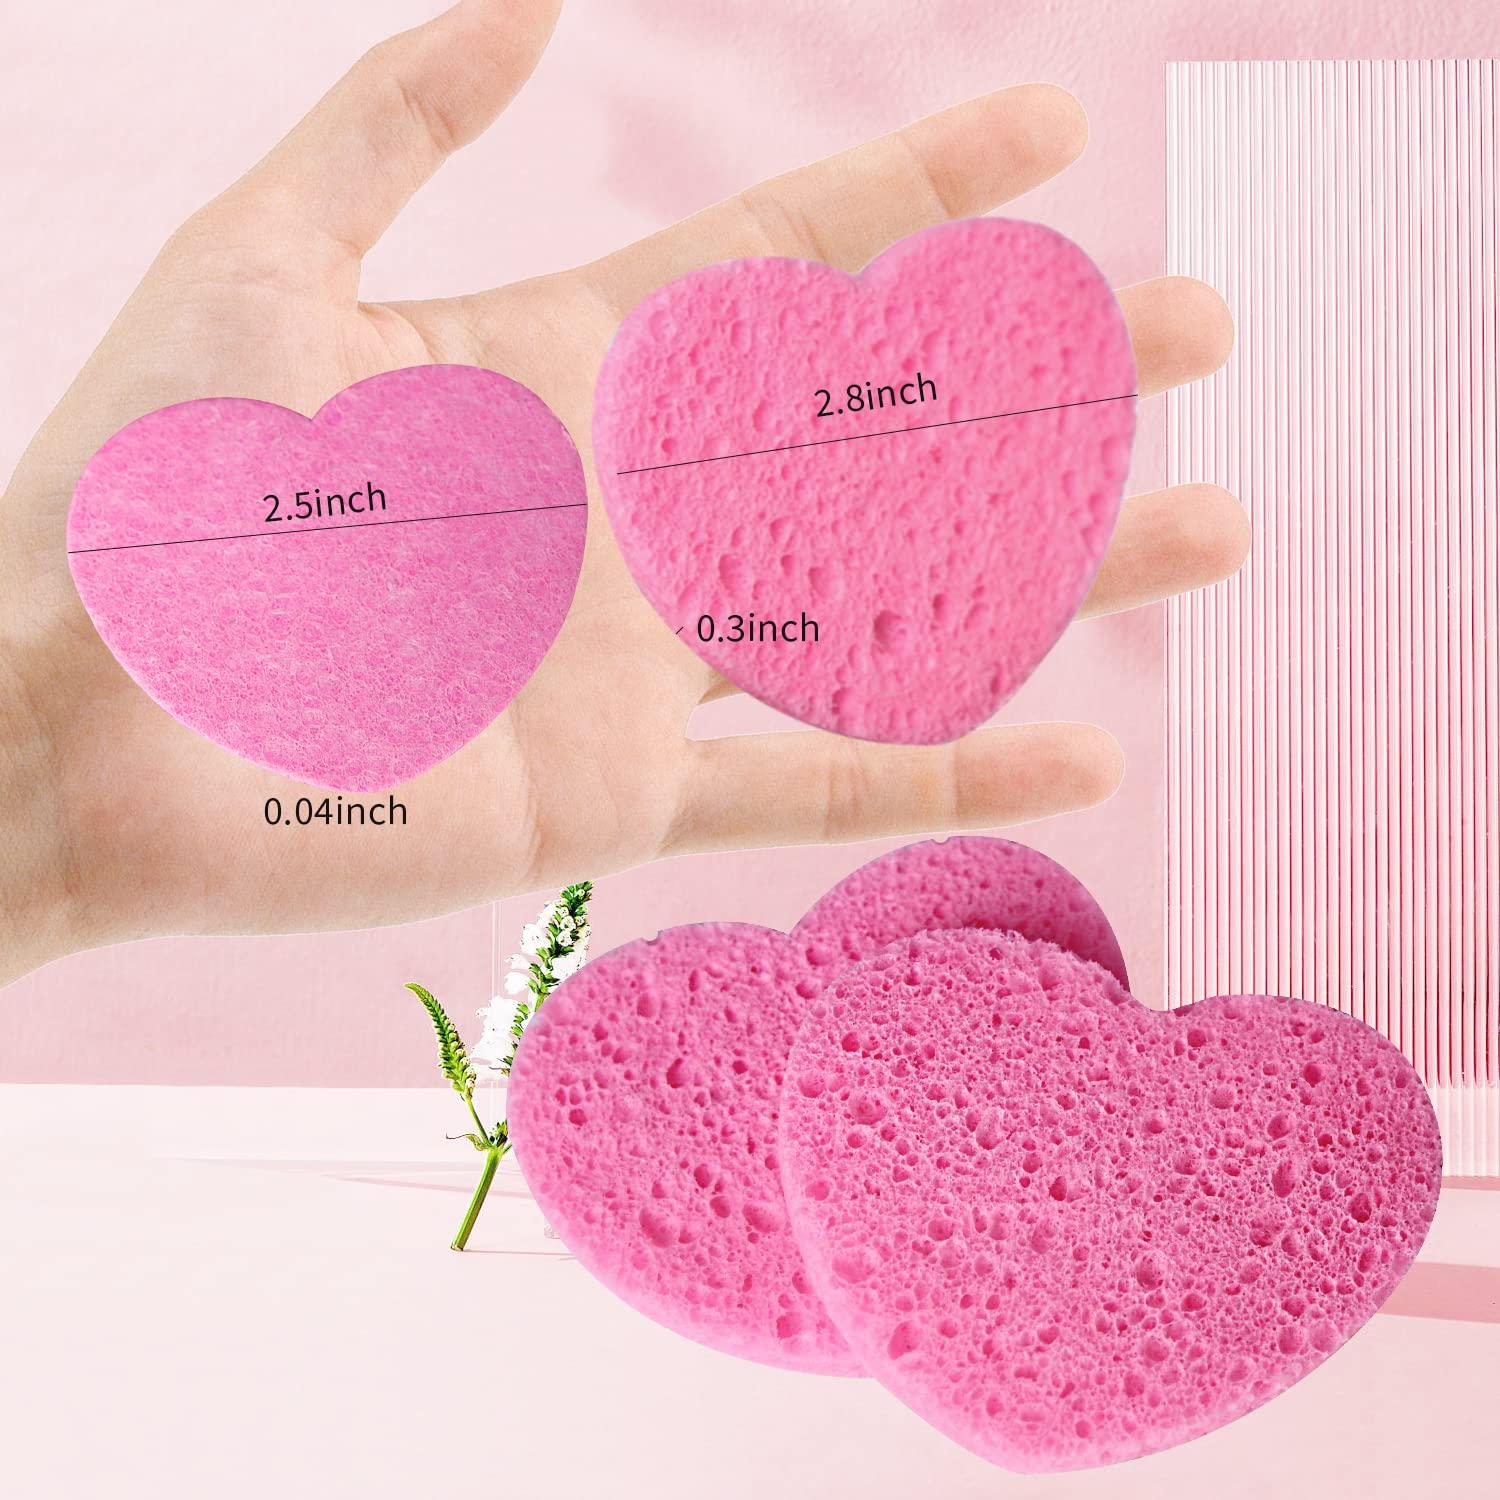 Lot of 2 Heart Shaped Makeup Sponges Applicators by Nucolor 2 Packs = 16pc  Total